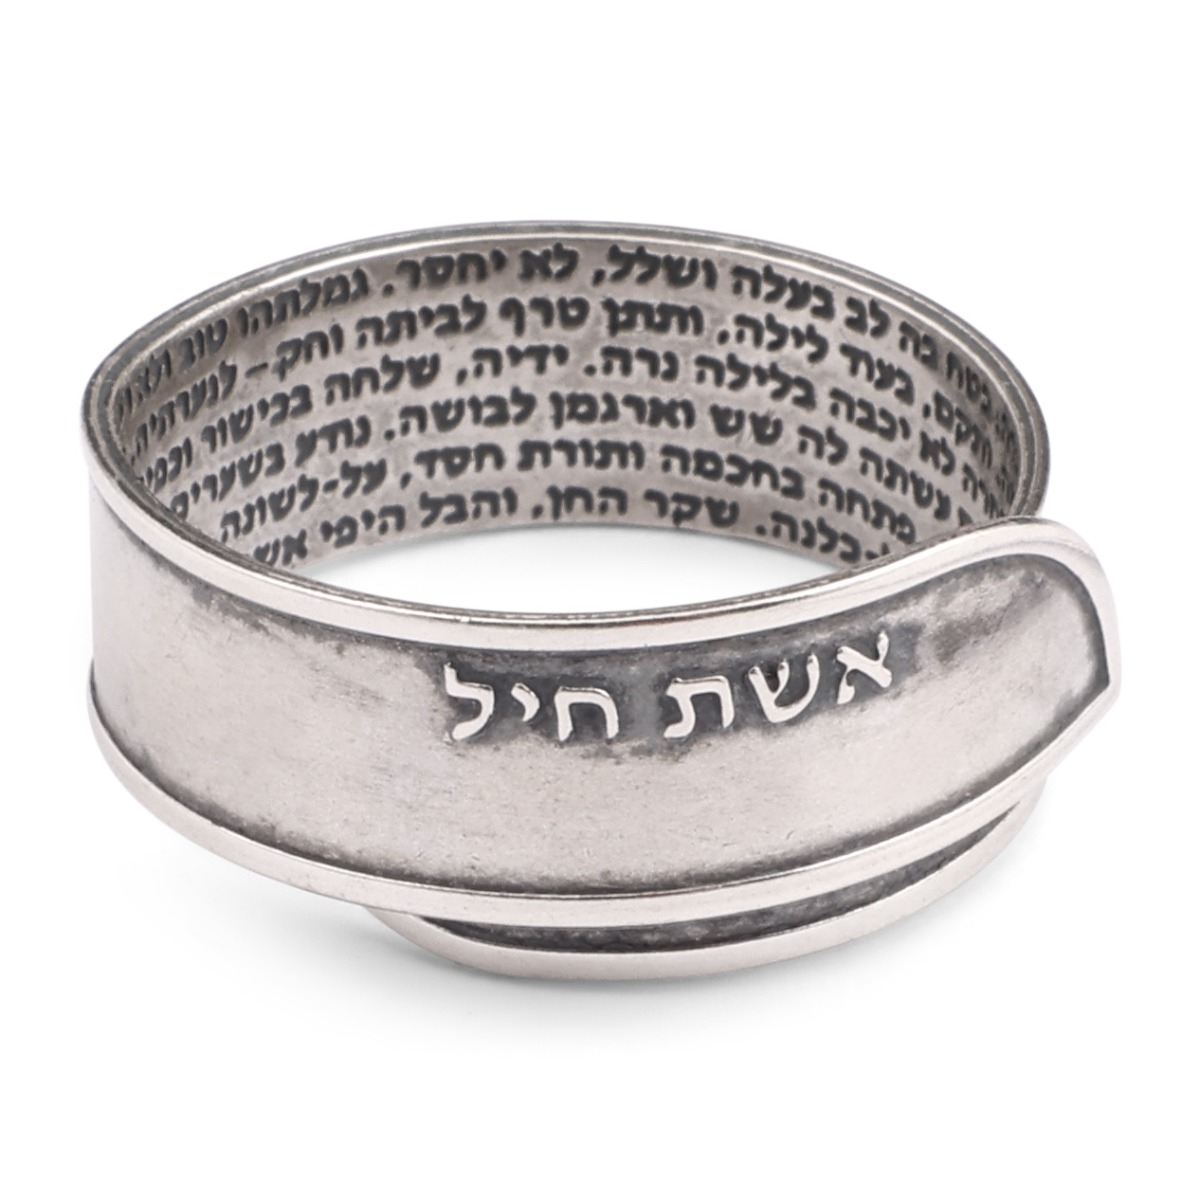 Handmade Blackened 925 Sterling Silver Adjustable Ring – Eshet Chayil (Proverbs 31:10-31) - 1